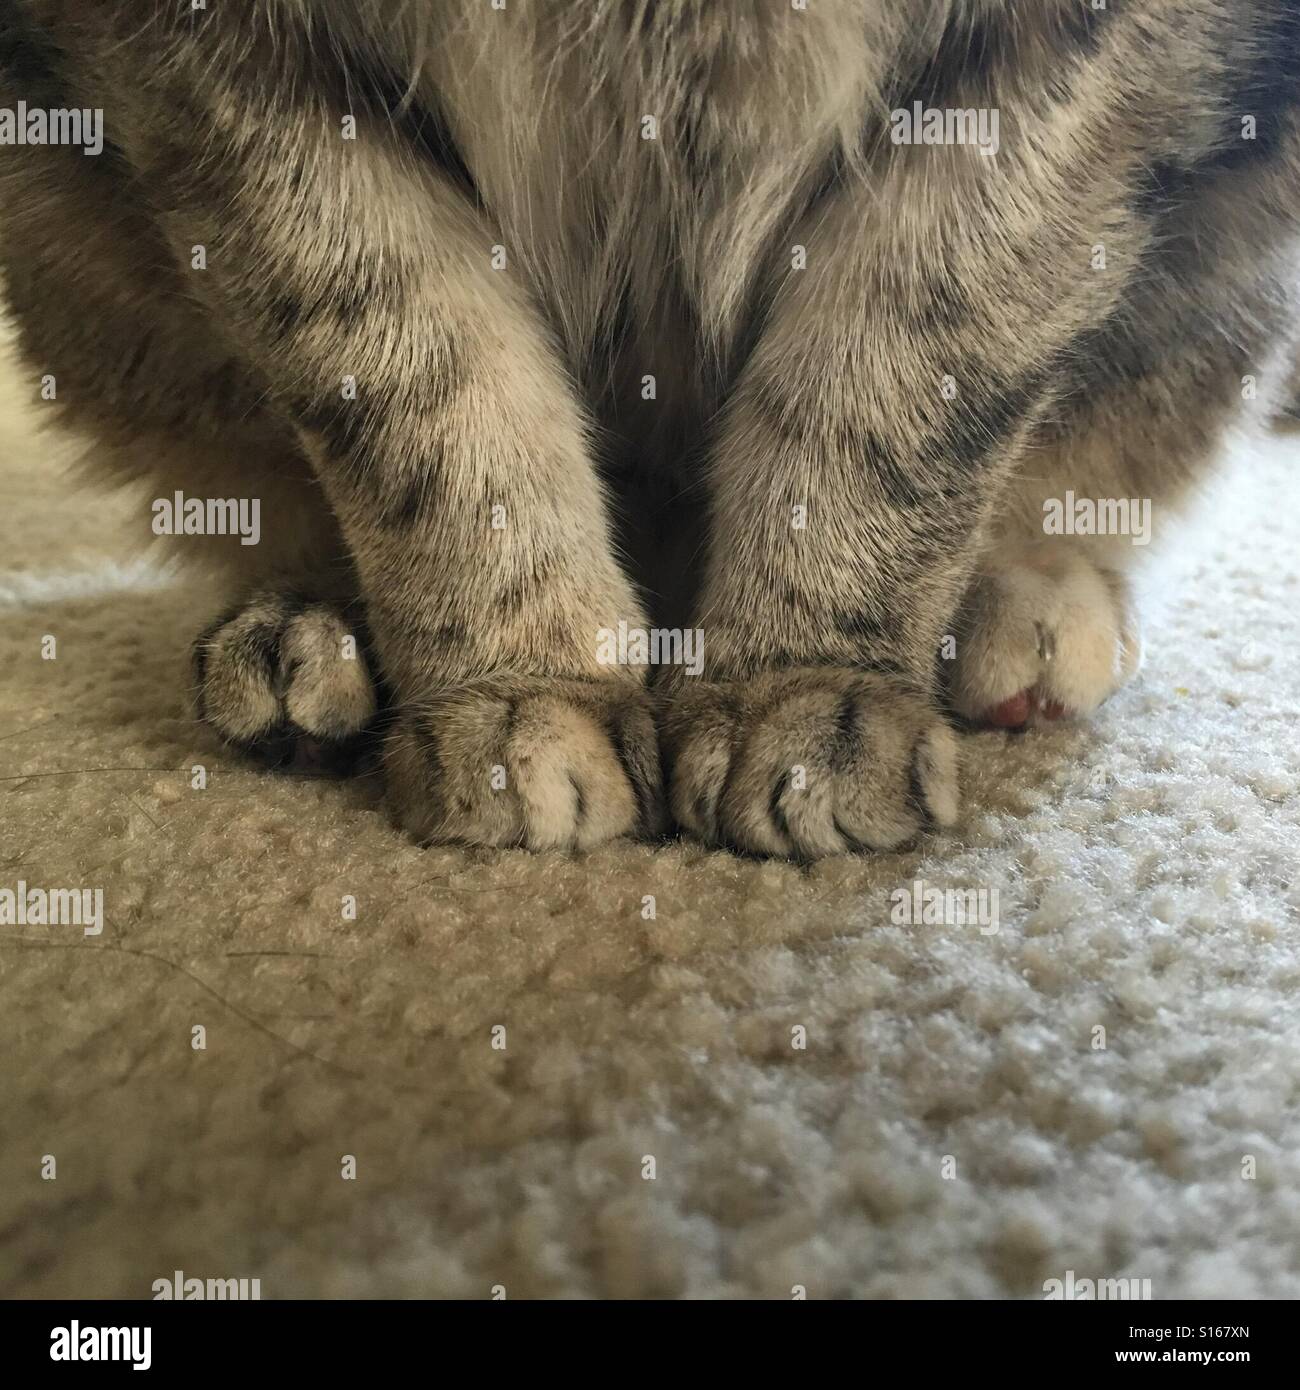 Cat paws close up on carpet Stock Photo